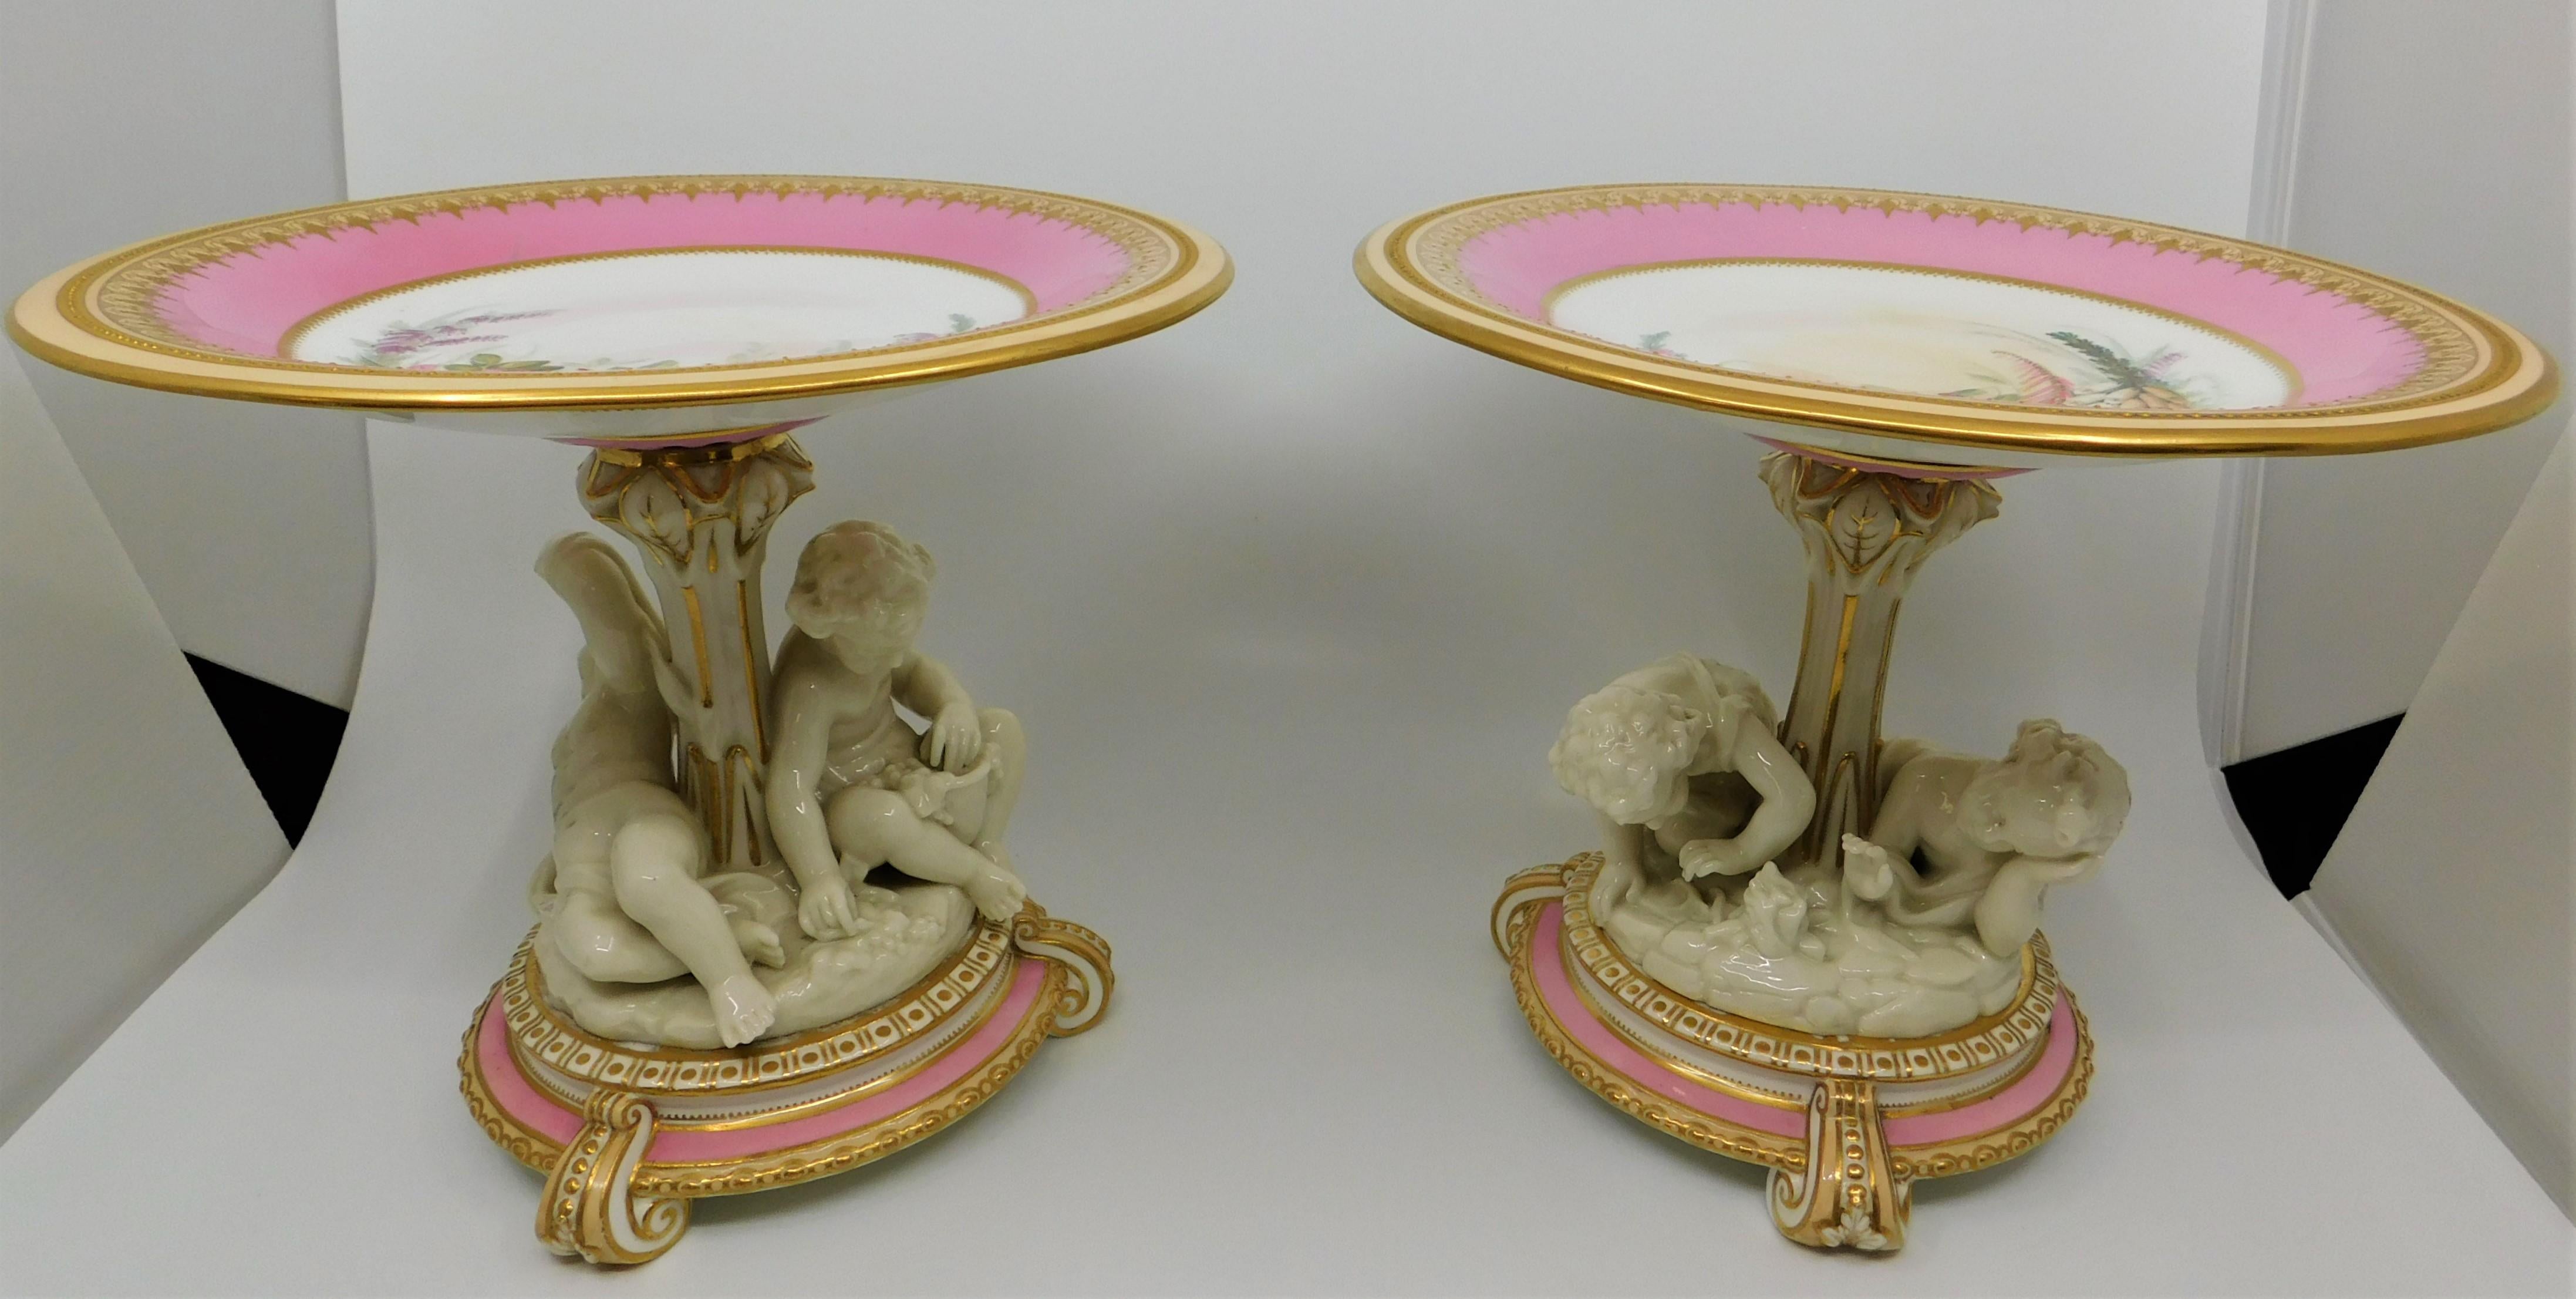 Porcelain 19th Century English Royal Worcester 11 Piece Hand-Painted Dessert Service Set